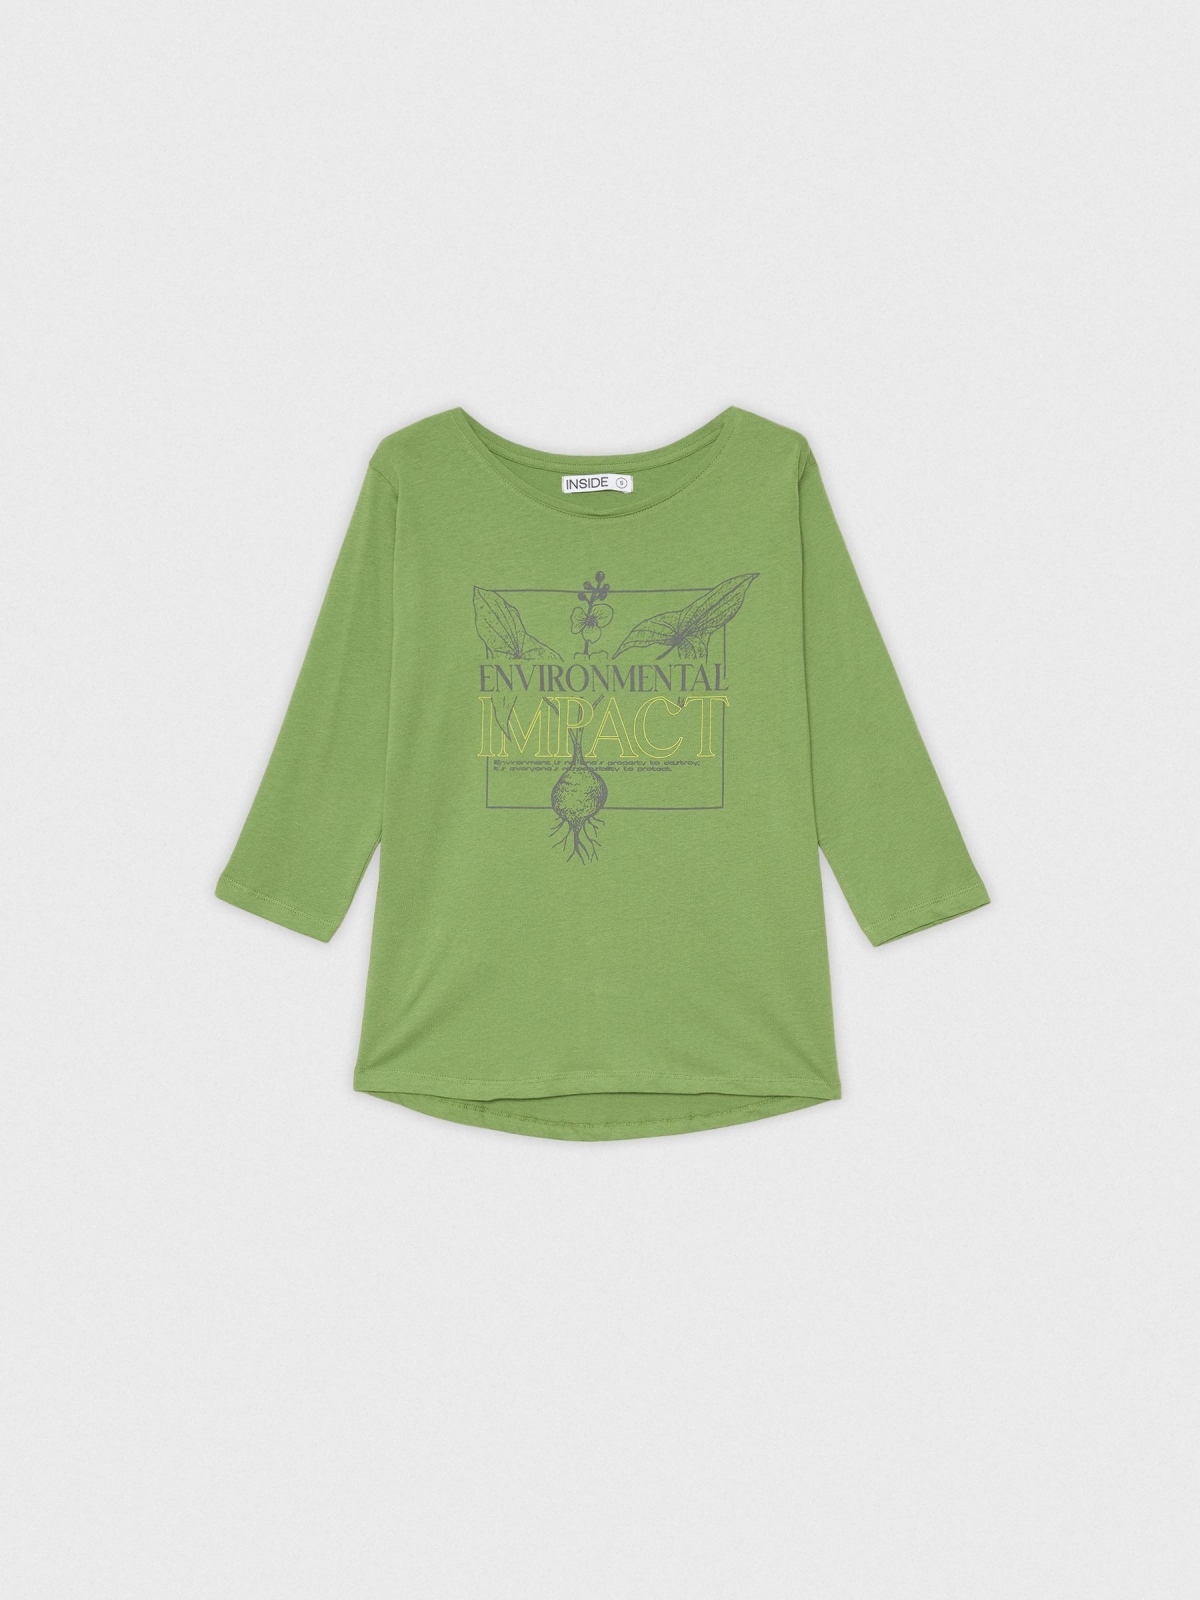  T-shirt ambiental verde oliva